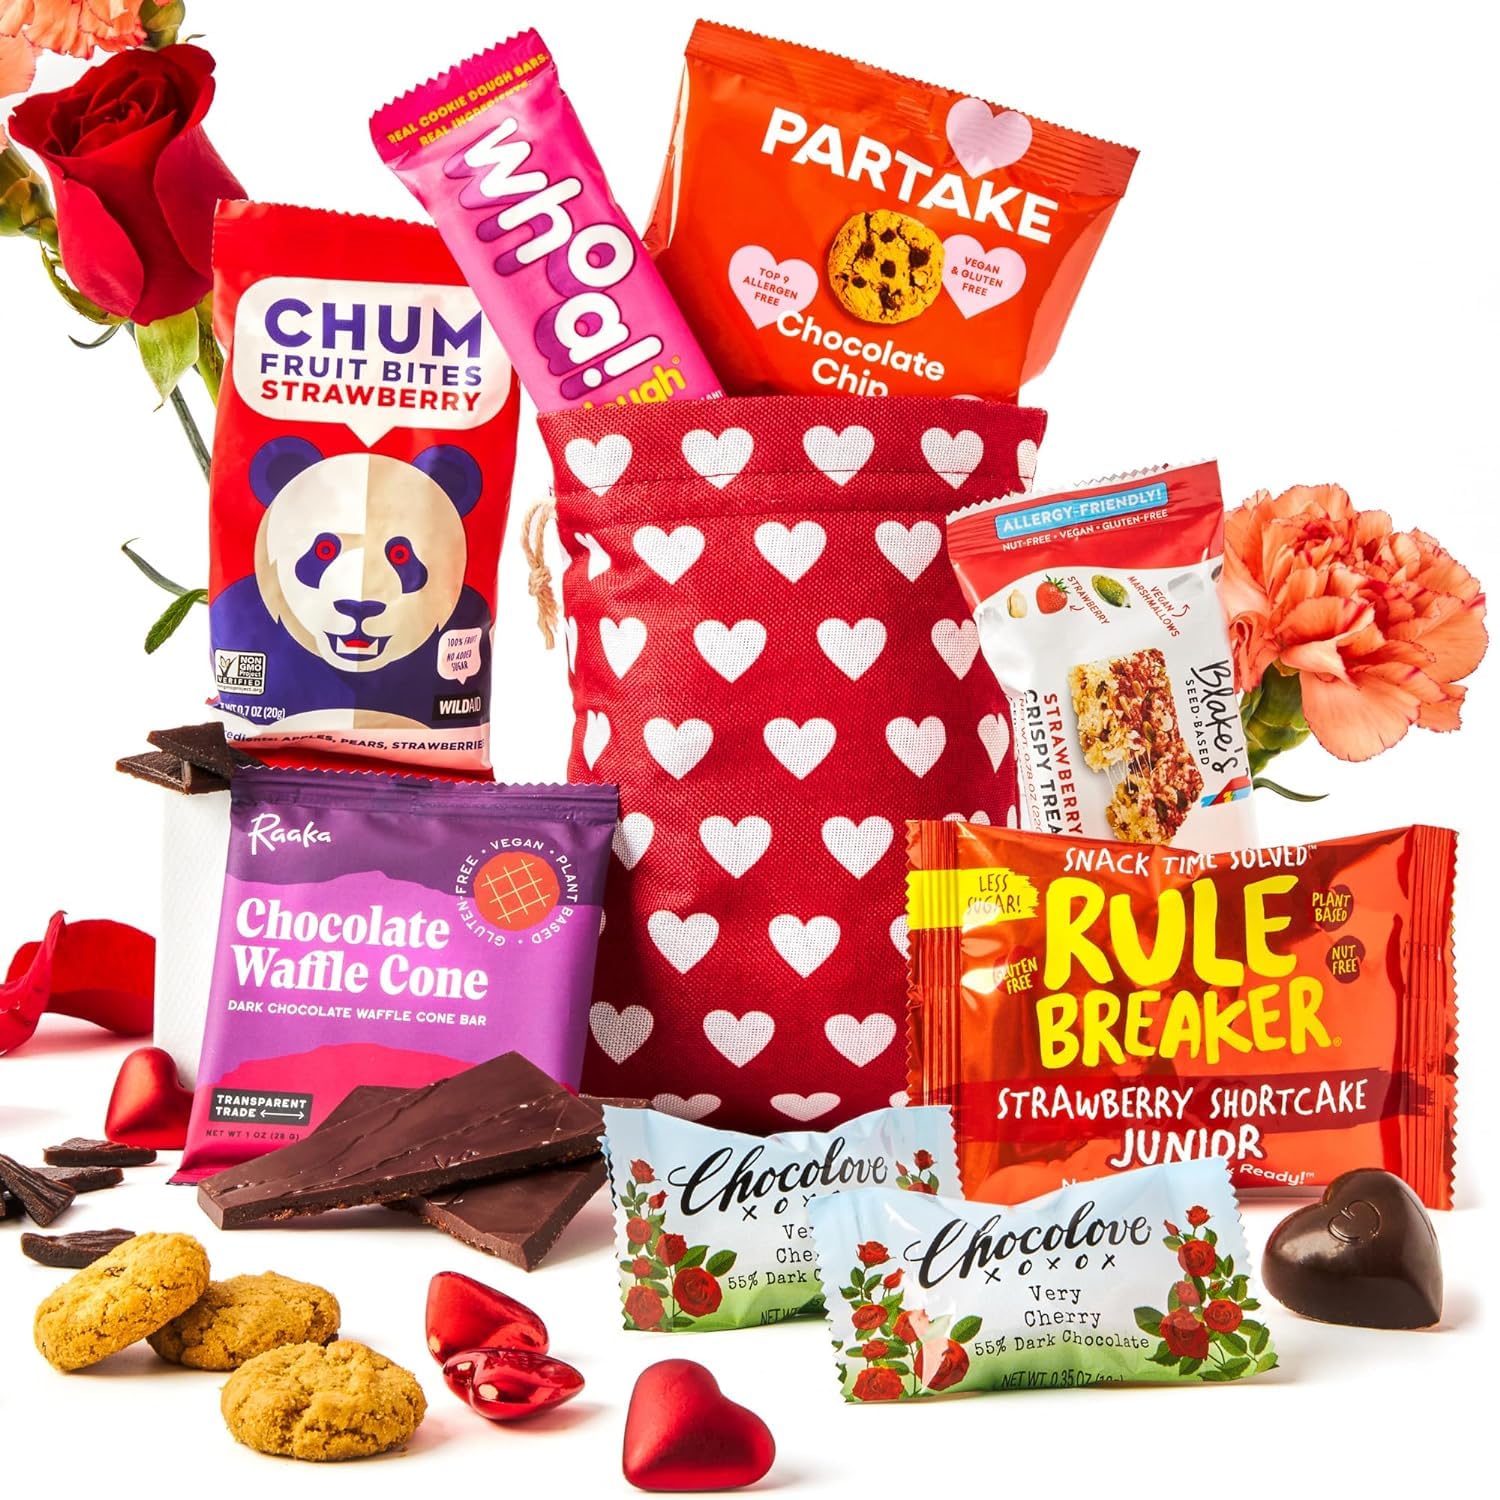 Bunny James Boxes Vegan Mother's Day Gift Bundle - Mix of Vegan Cookies, Protein Bars, Chips, Vegan Jerky, Fruit & Nut Snacks, Amazing Vegan Gift Bundle!